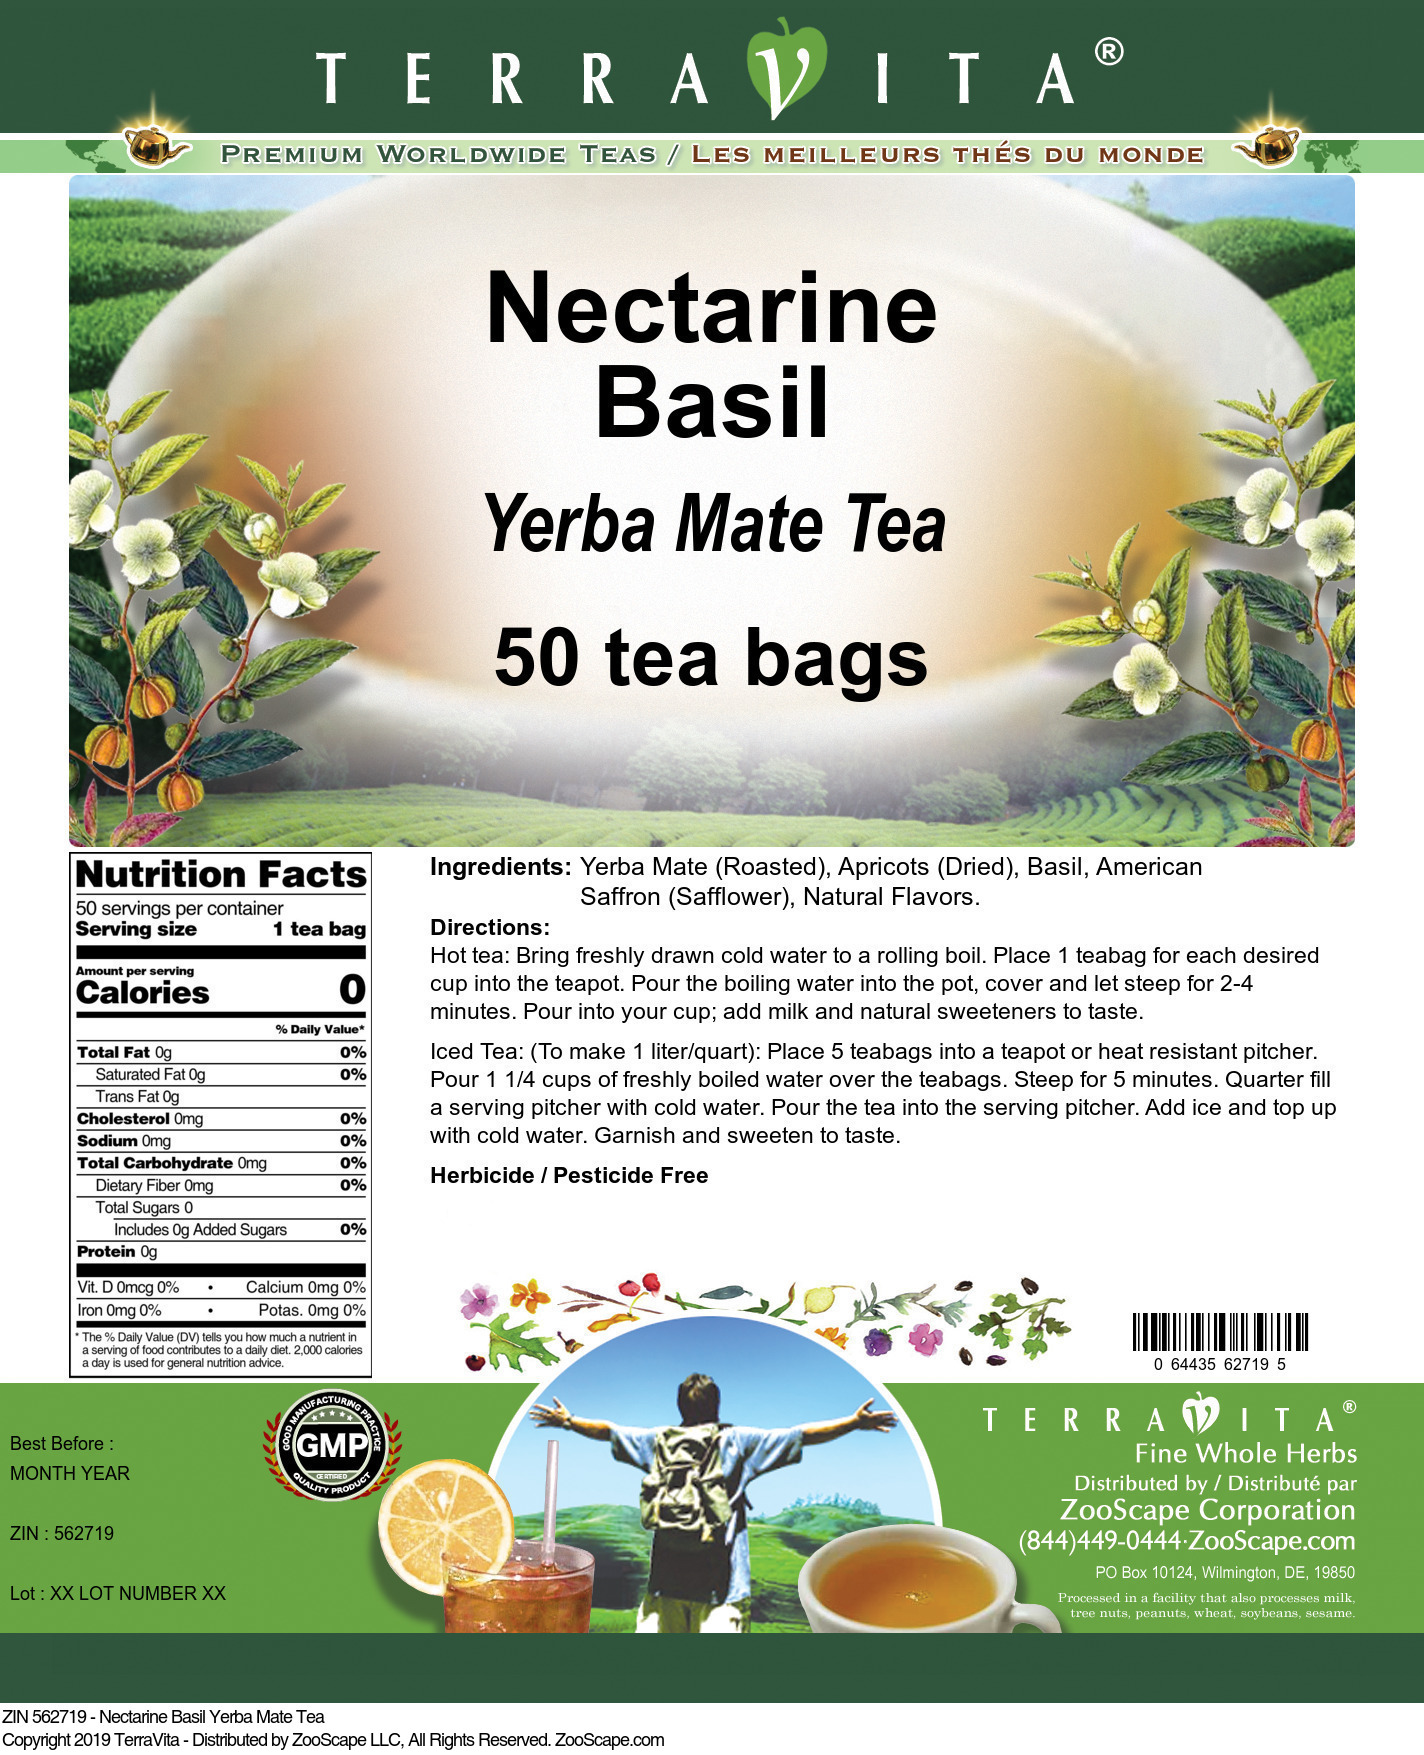 Nectarine Basil Yerba Mate Tea - Label